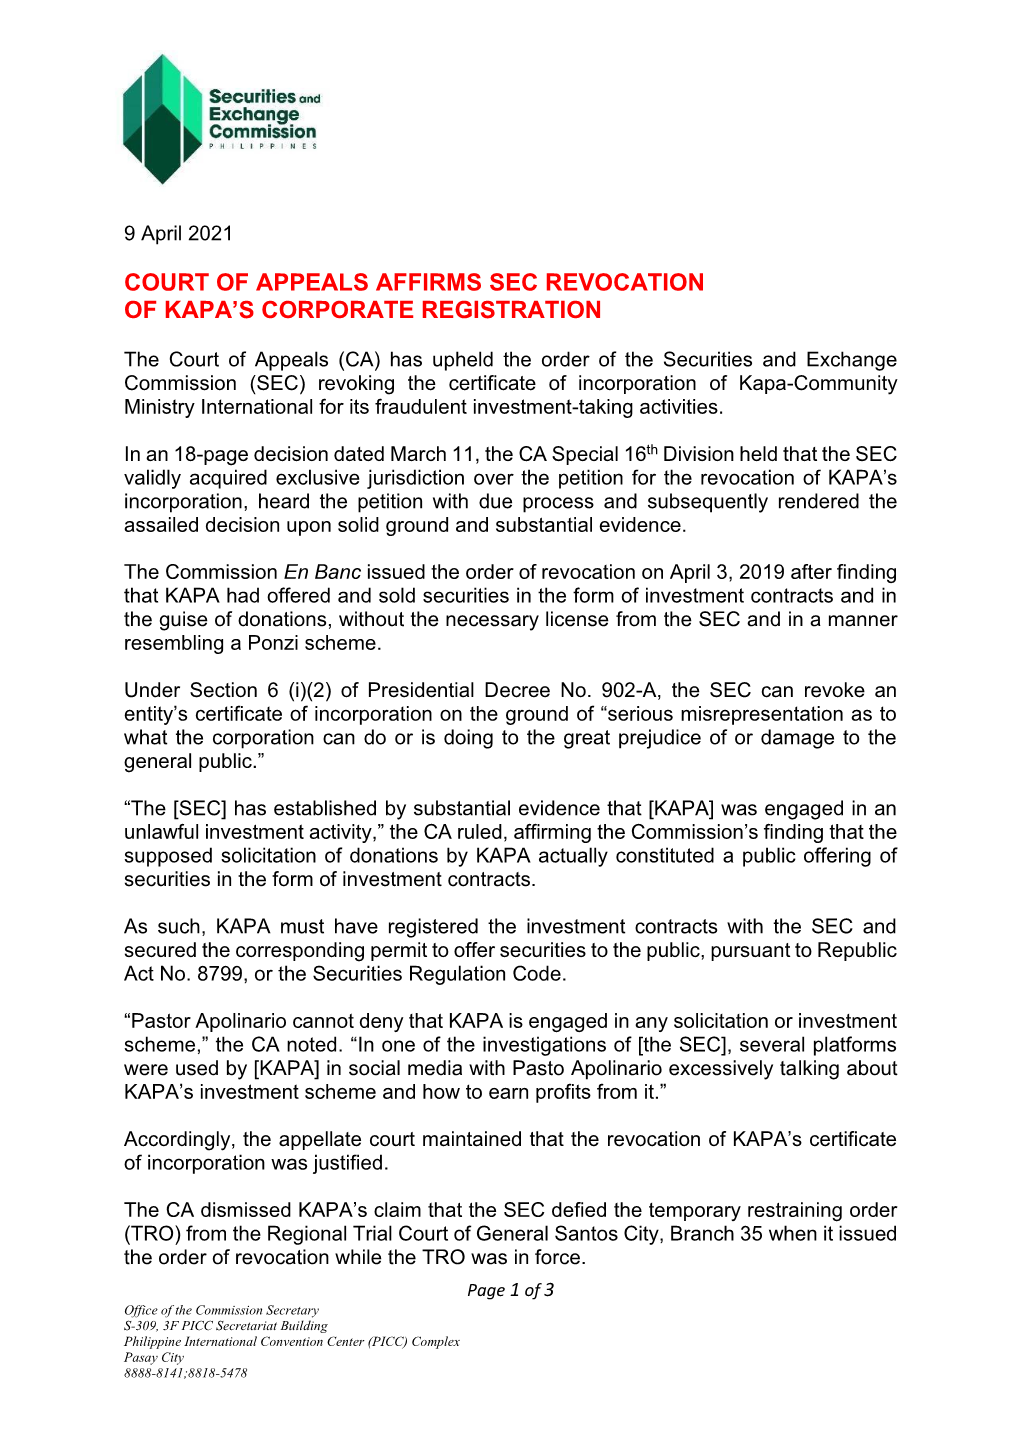 Court of Appeals Affirms Sec Revocation of Kapa's